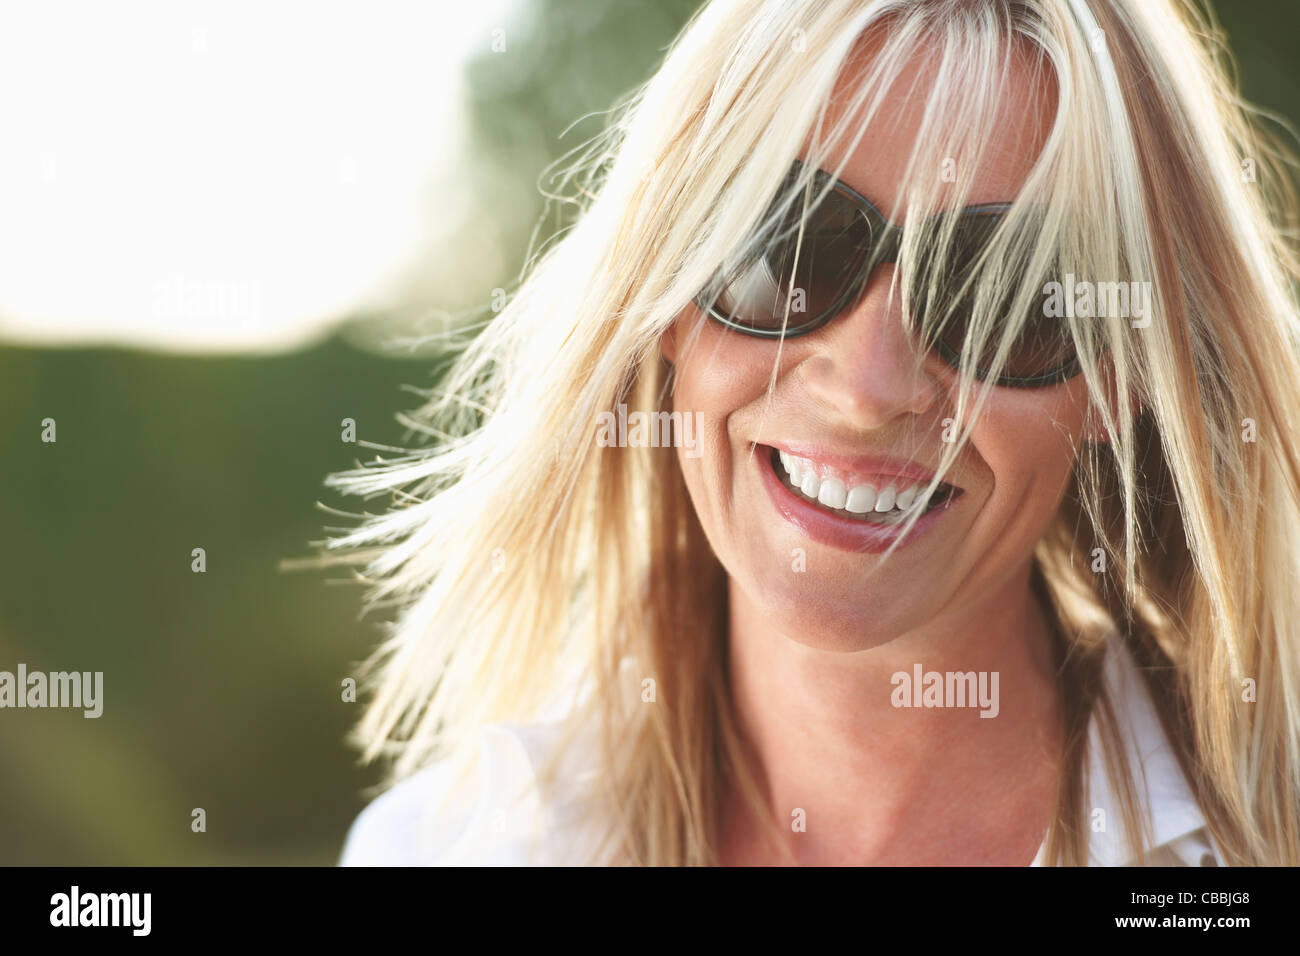 Smiling woman wearing sunglasses Stock Photo